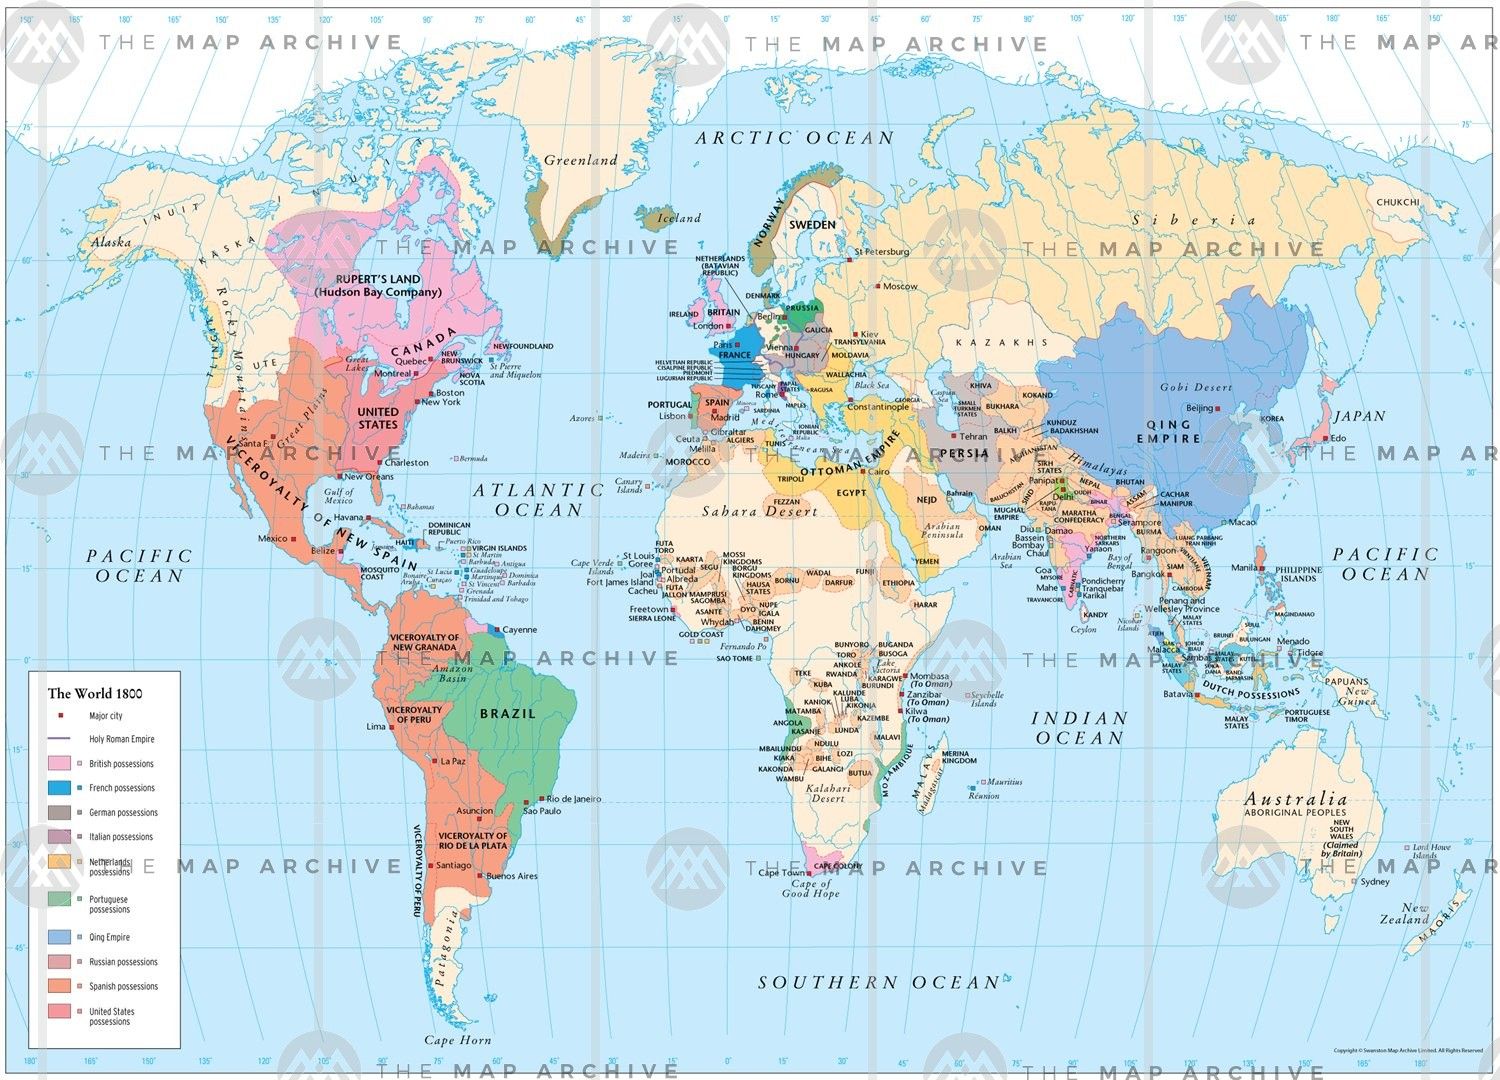 The World 1800